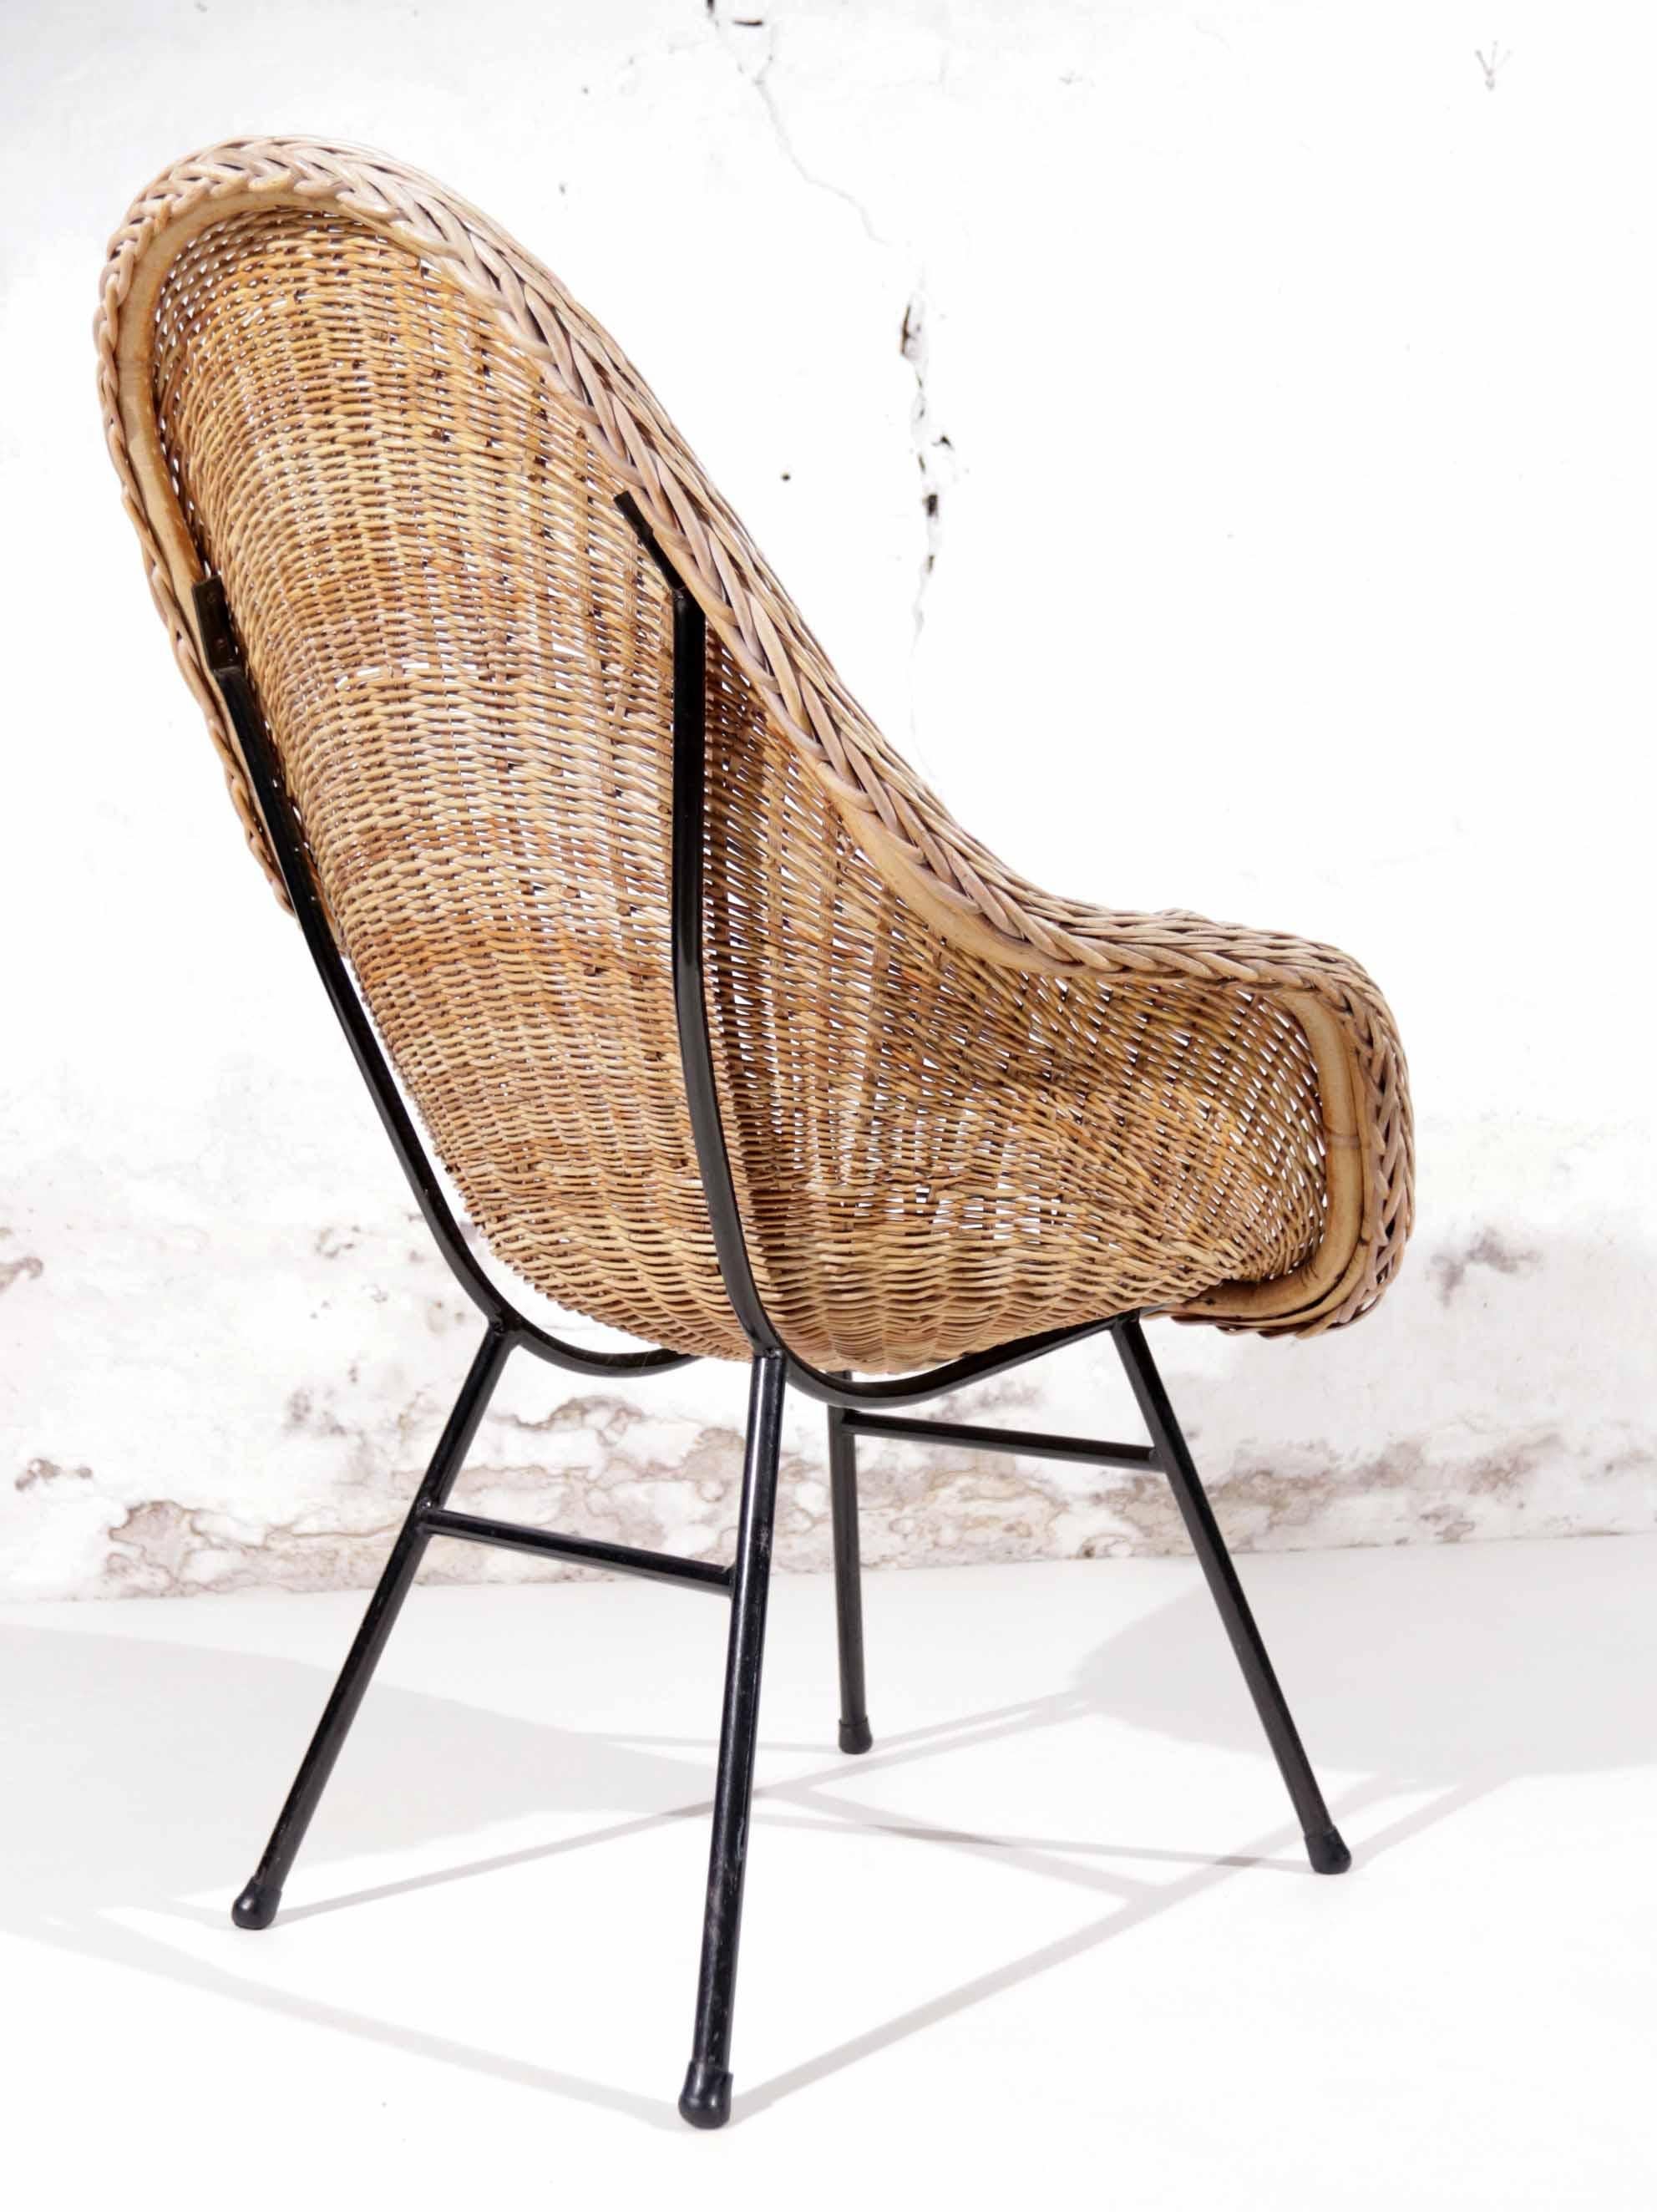 1960s Dutch Wicker Bucket / Basket Chair with Icelandic Sheepskin-2 In Good Condition For Sale In Boven Leeuwen, NL